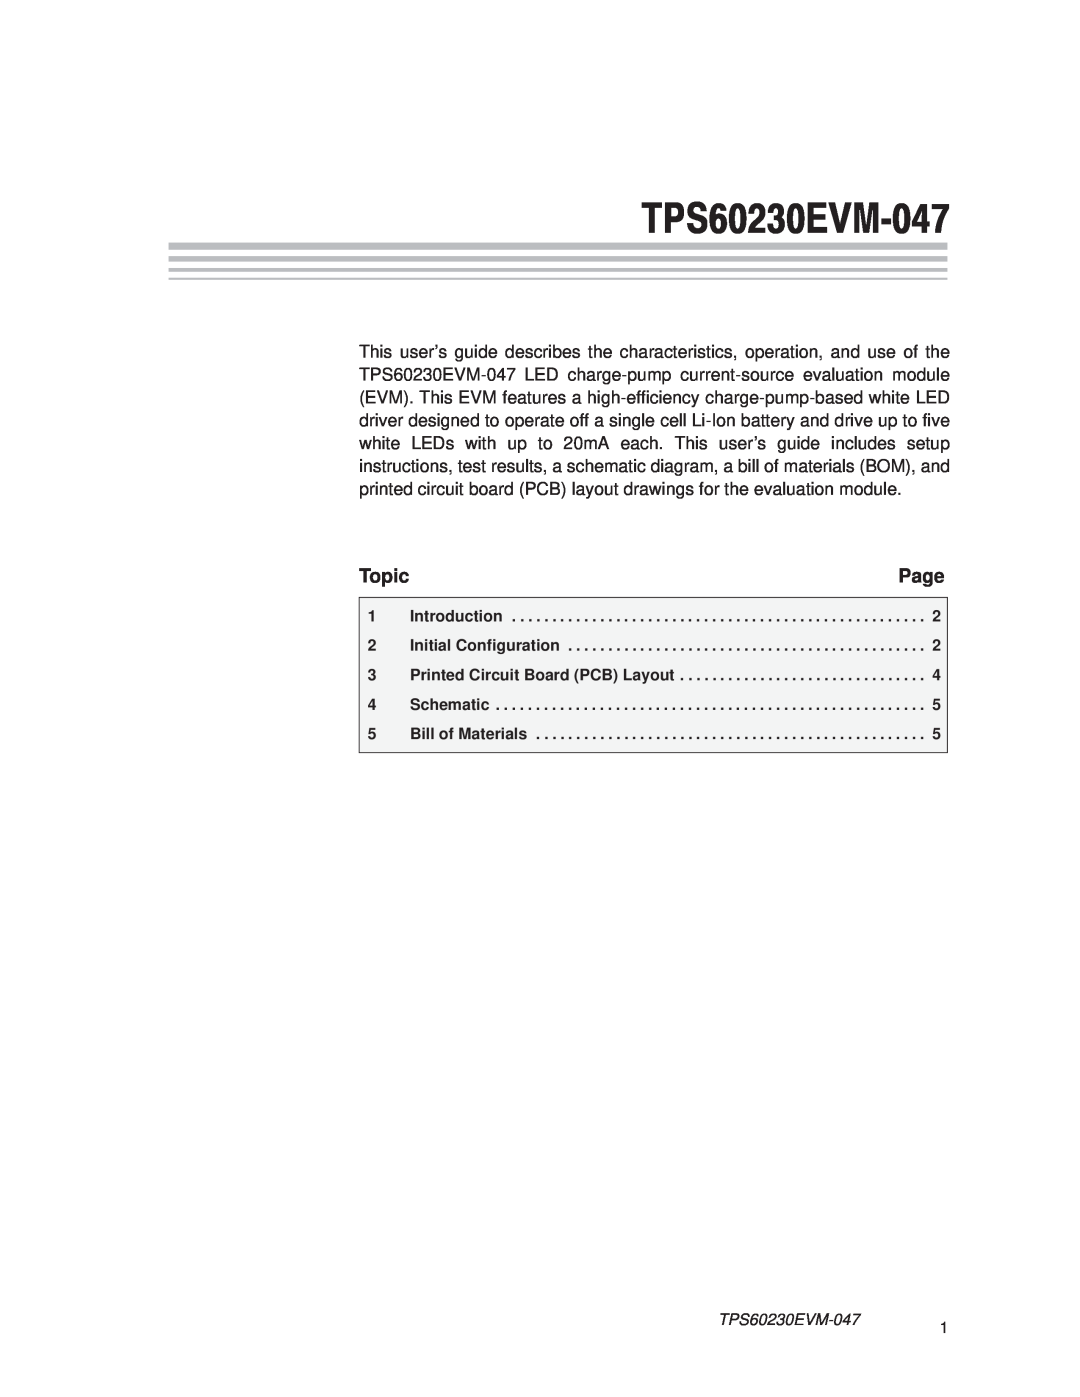 Texas Instruments TPS60230EVM-047 manual TPS60230EVM047, Page, Topic 